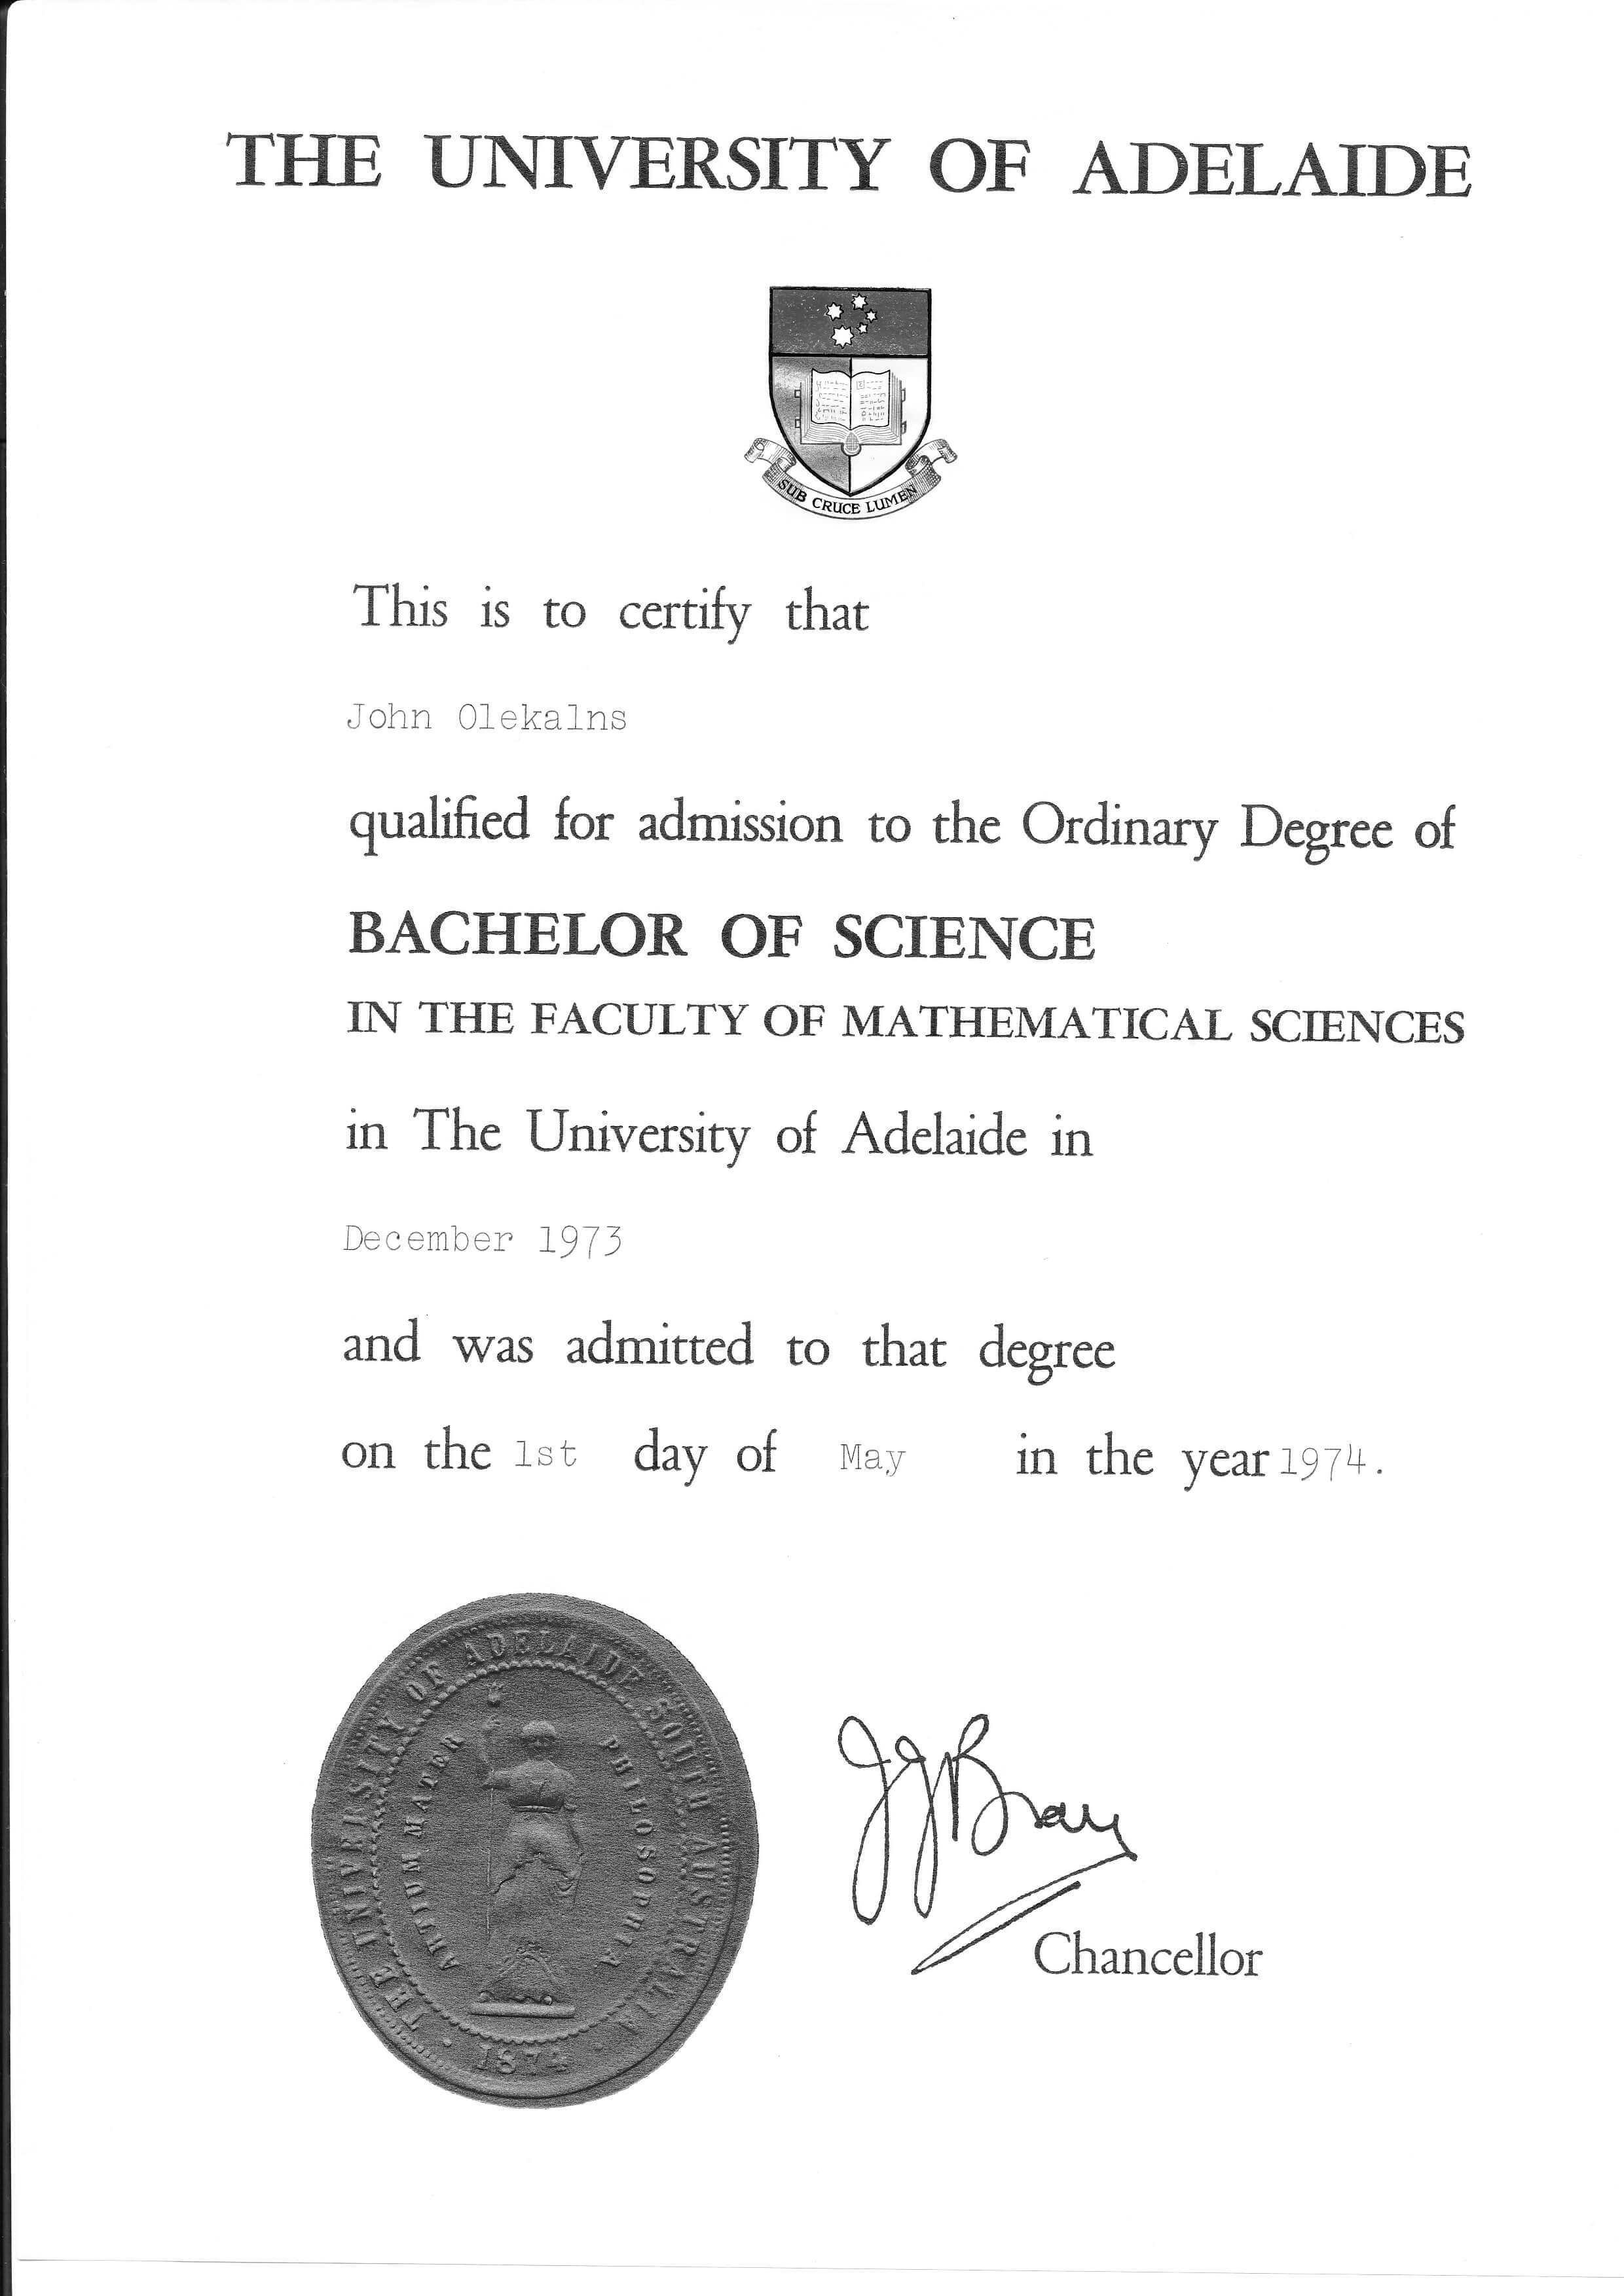 Bachelor of Science parchment